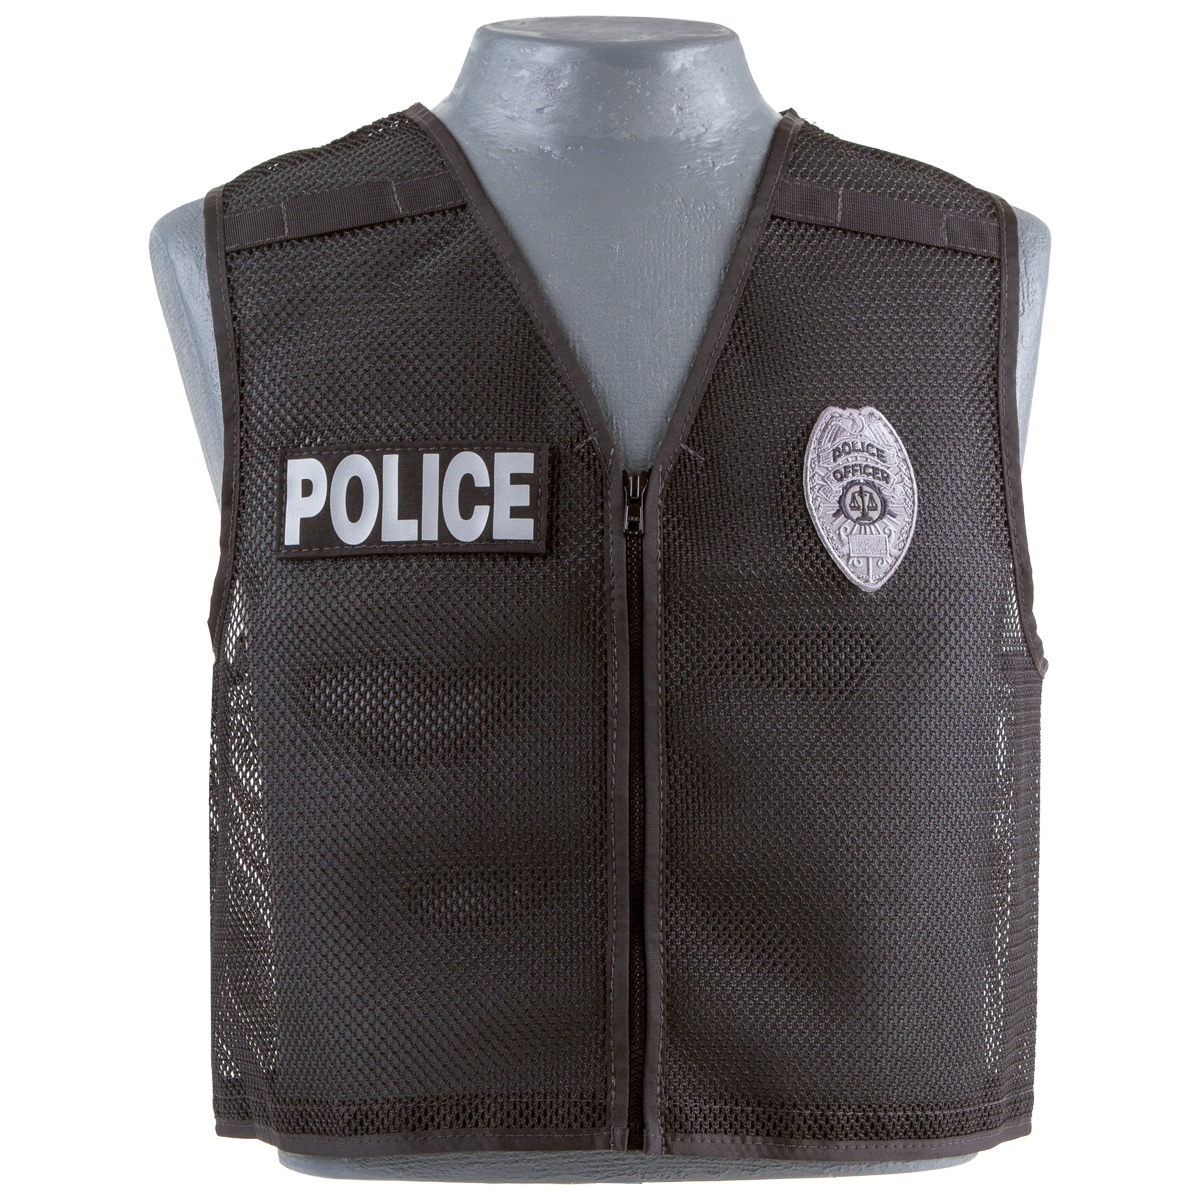 Cowell Identification (ID) Vest